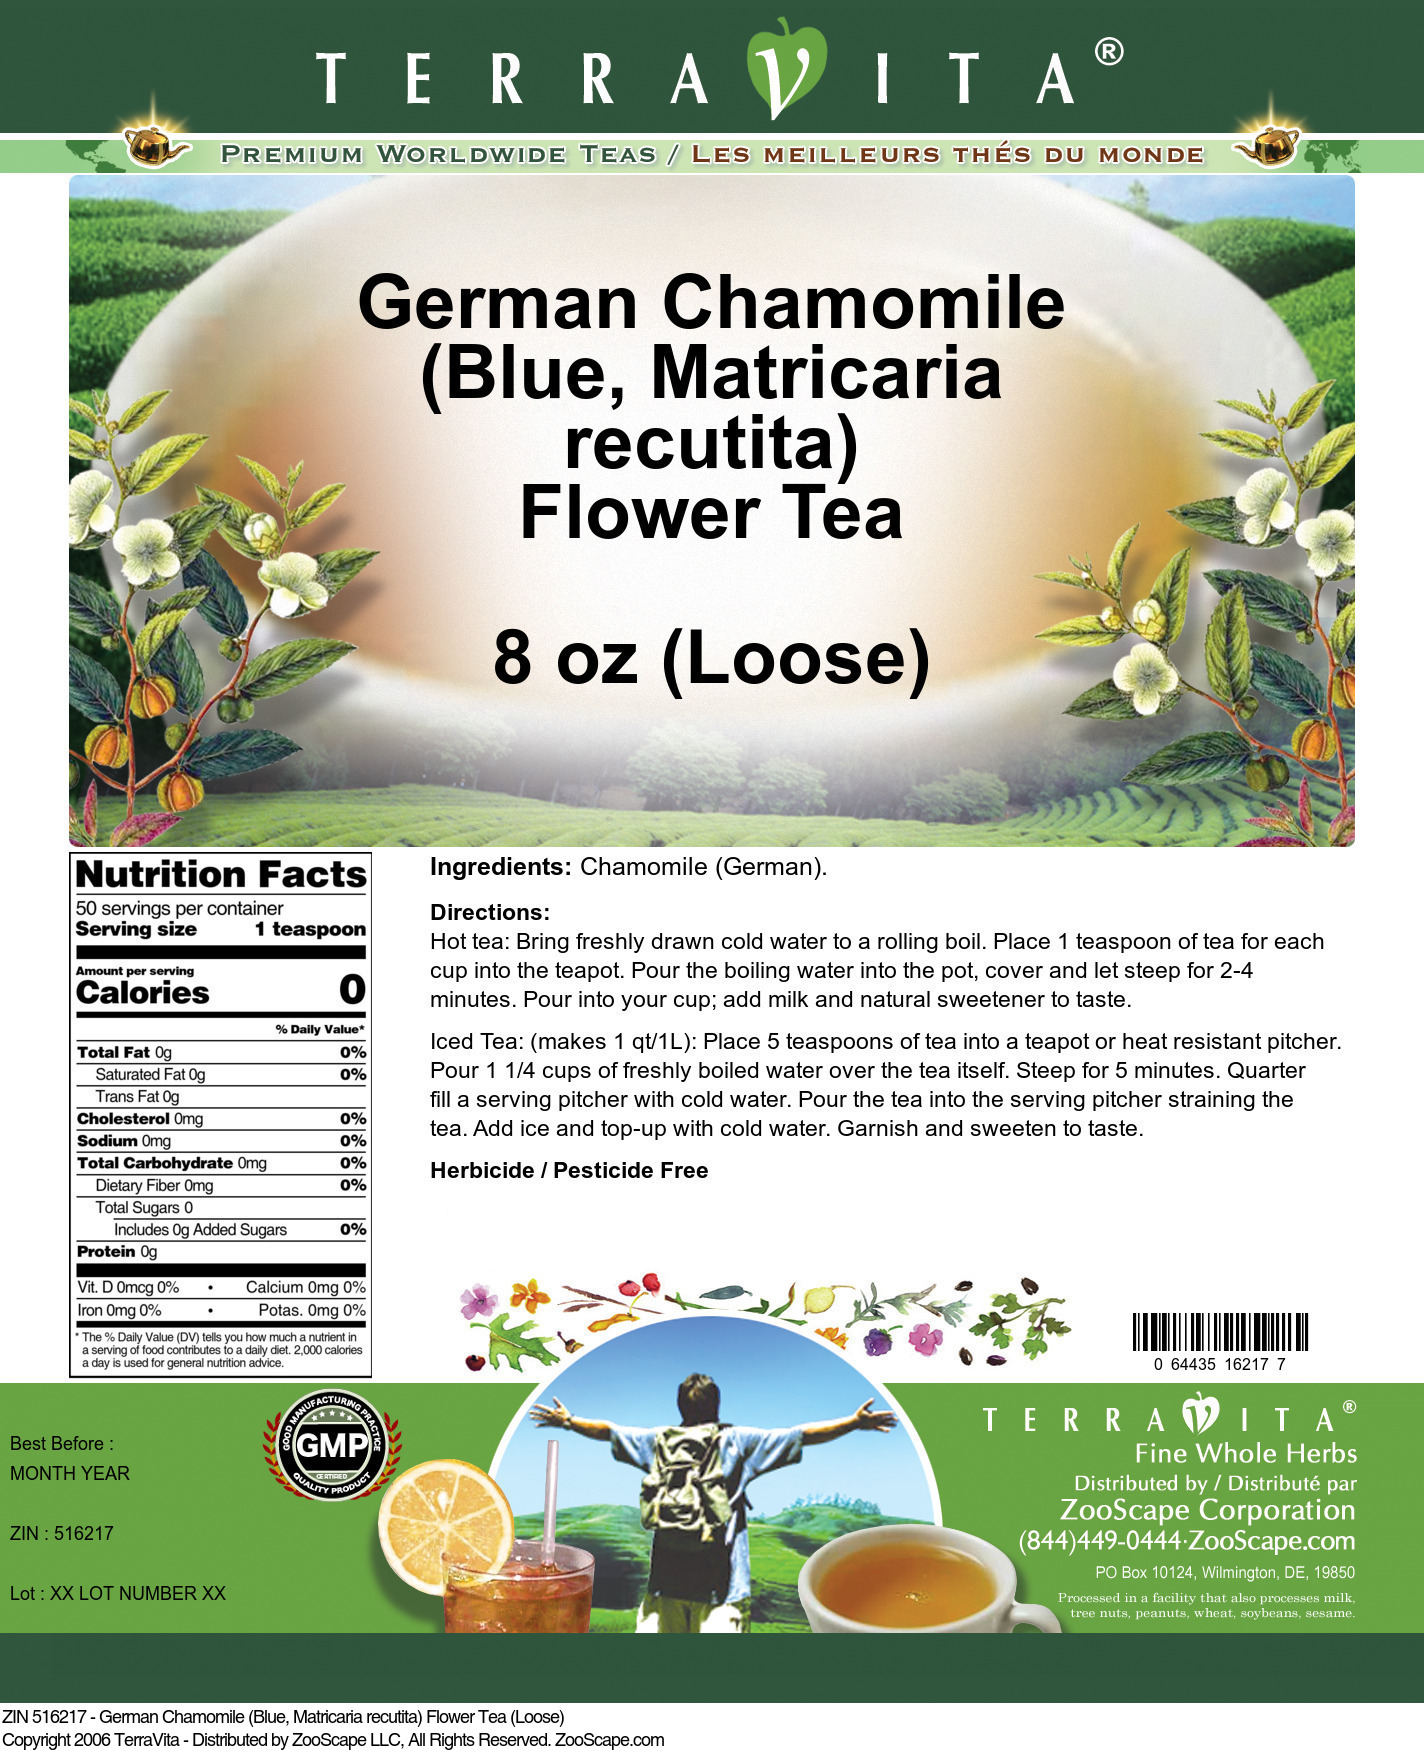 German Chamomile (Blue, Matricaria recutita) Flower Tea (Loose) - Label